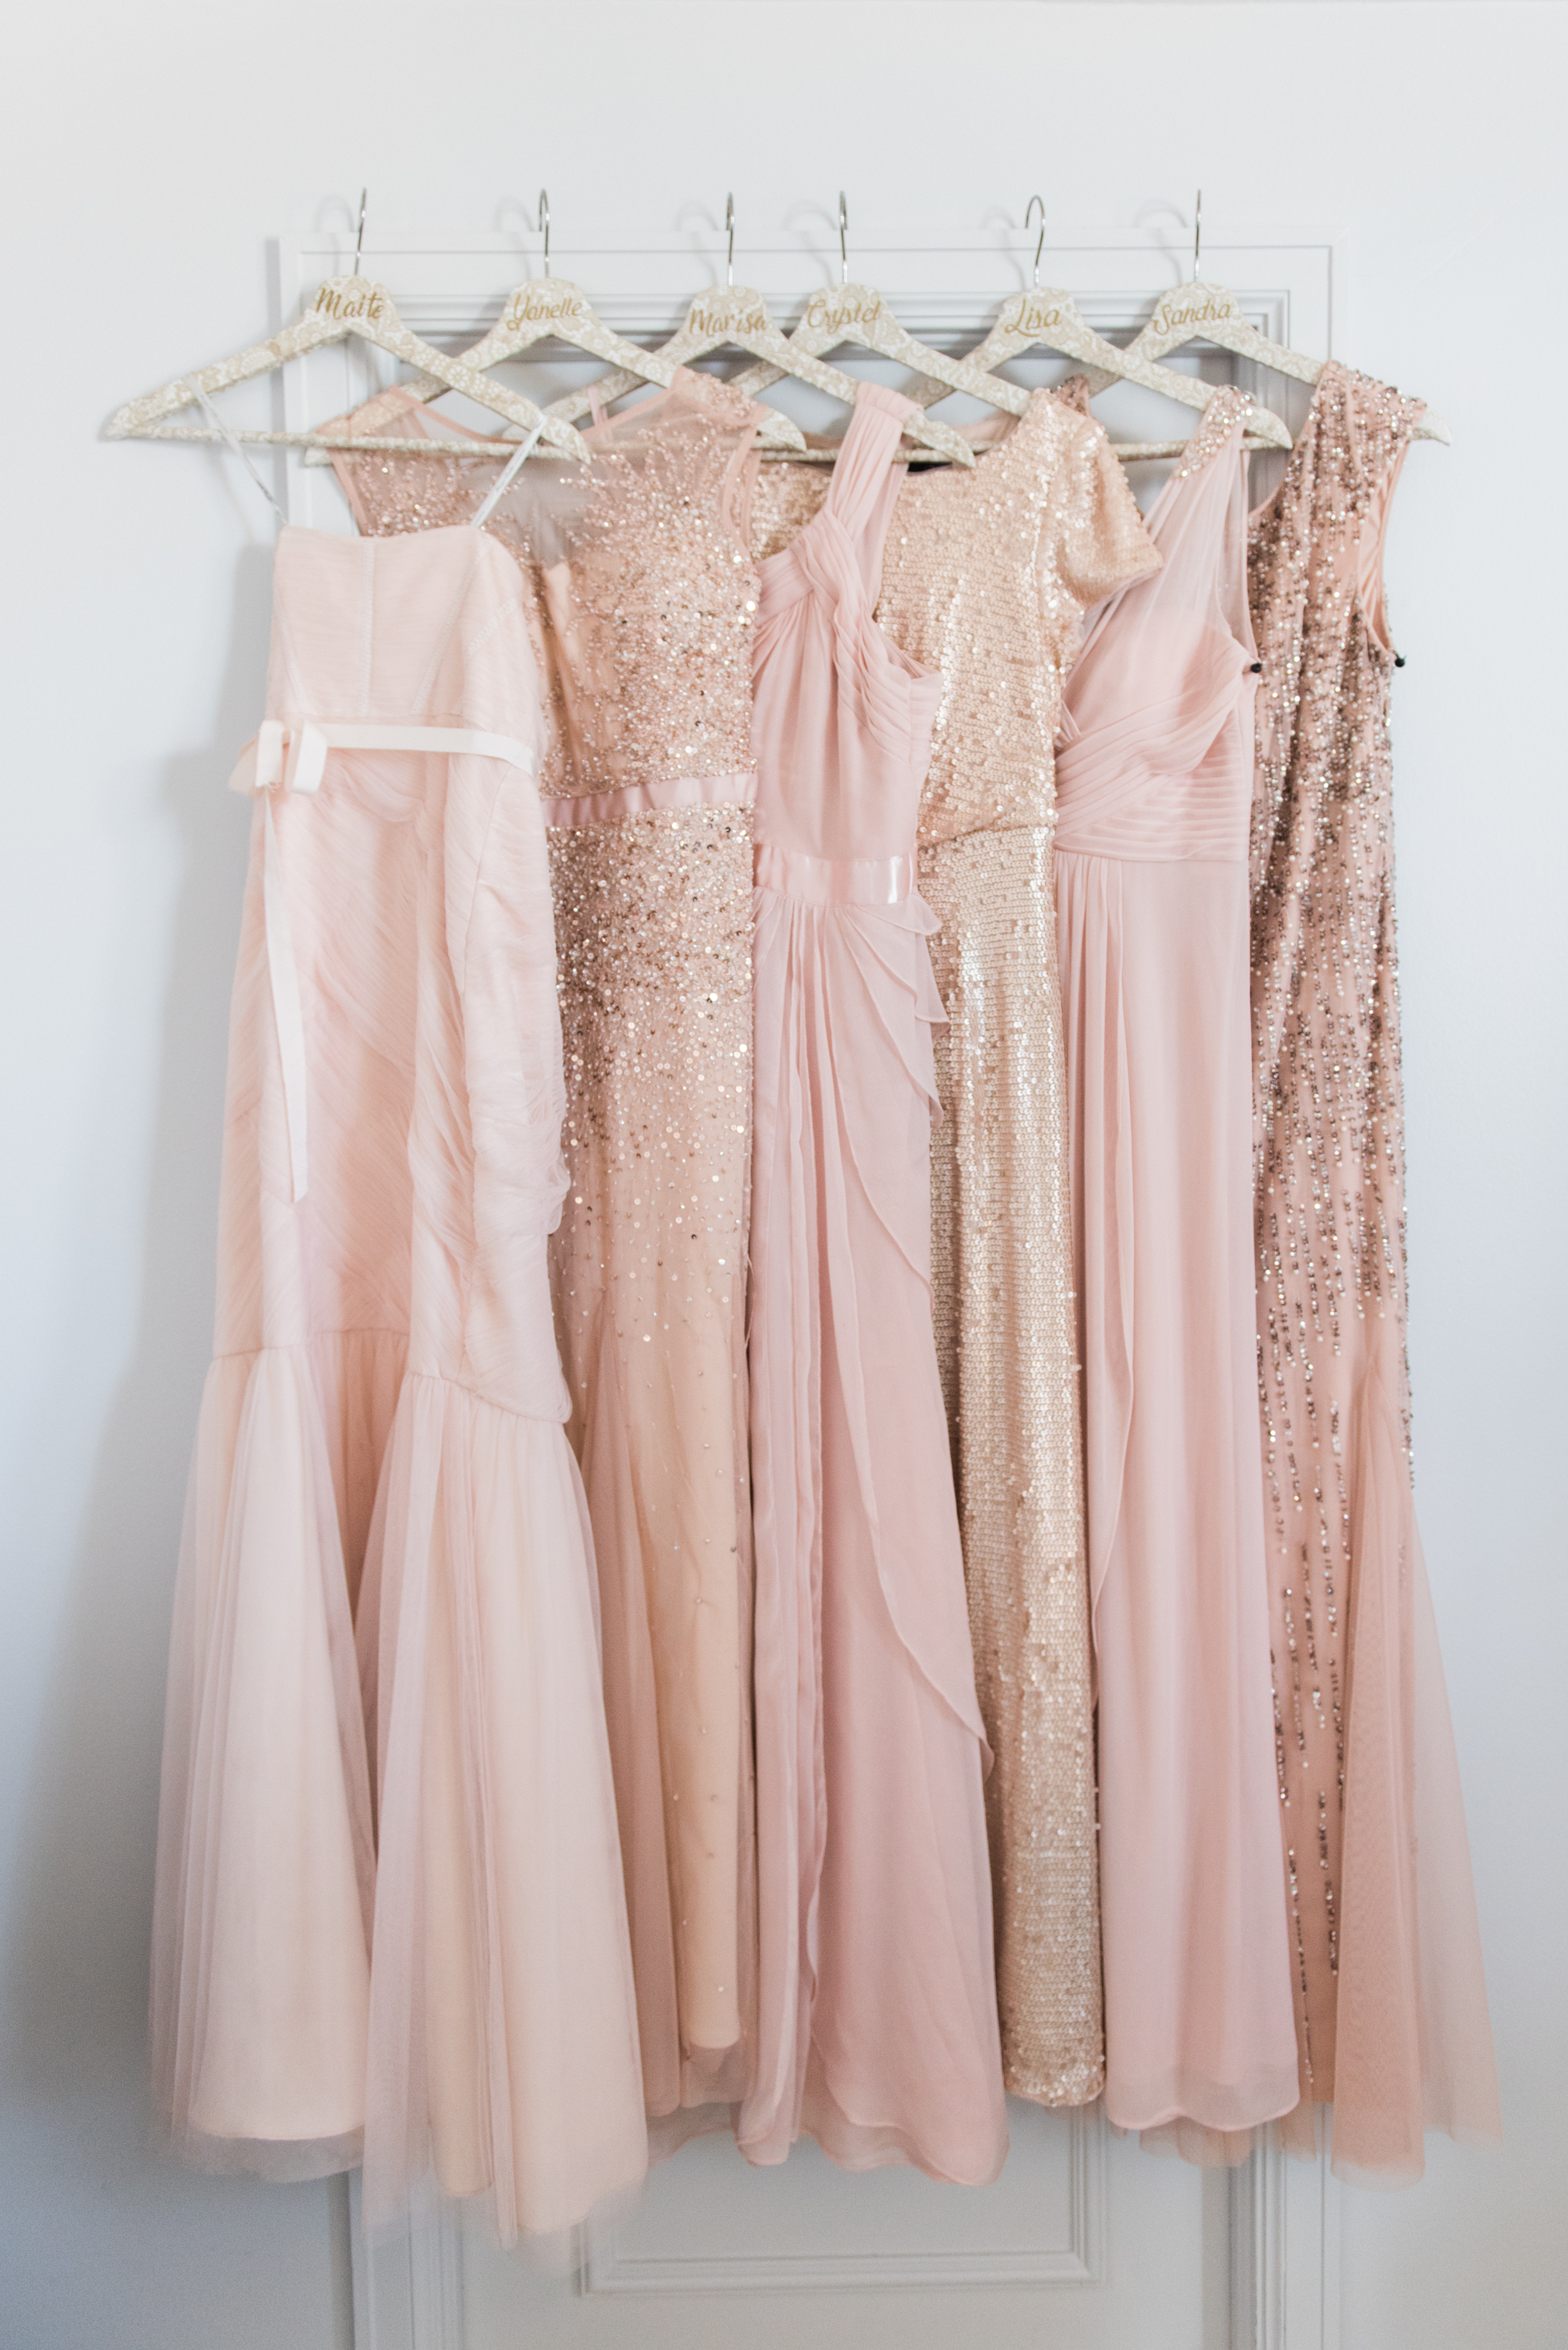 Blush Bridesmaid Dresses - Flagler Museum Palm Beach Wedding Venue - The Overwhelmed Bride Wedding Blog